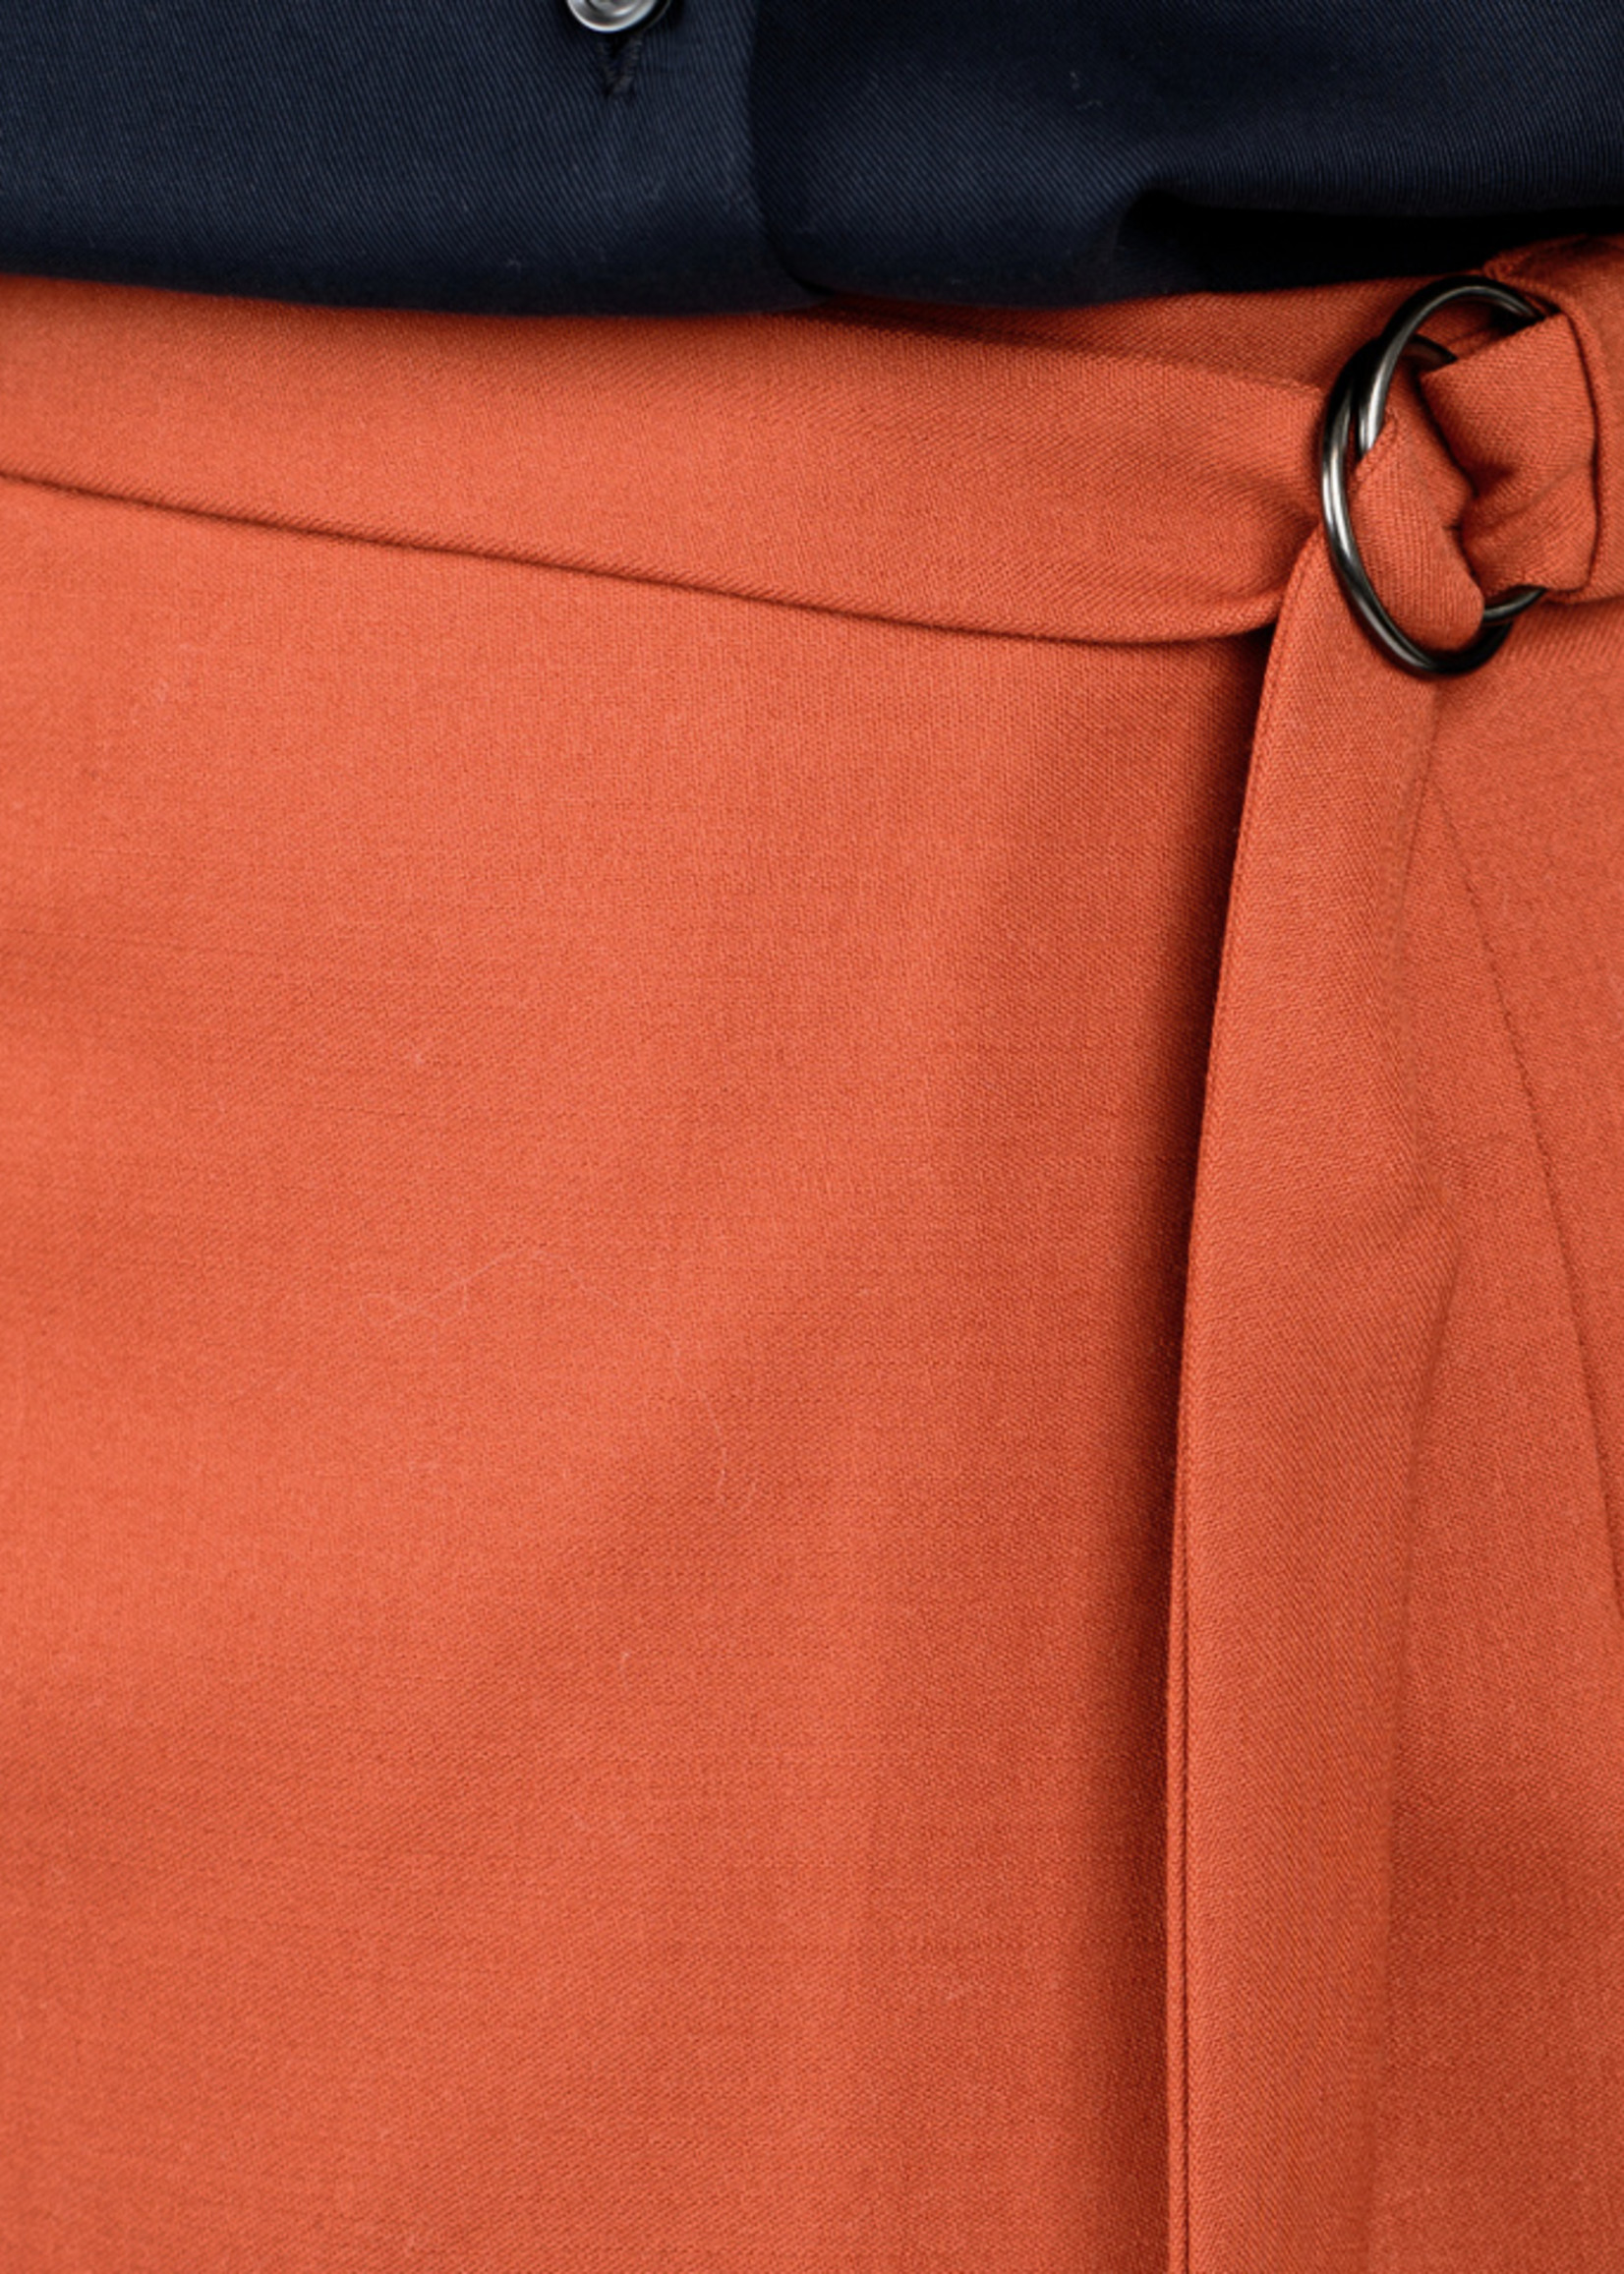 Skirt wrap look | Rusty orange